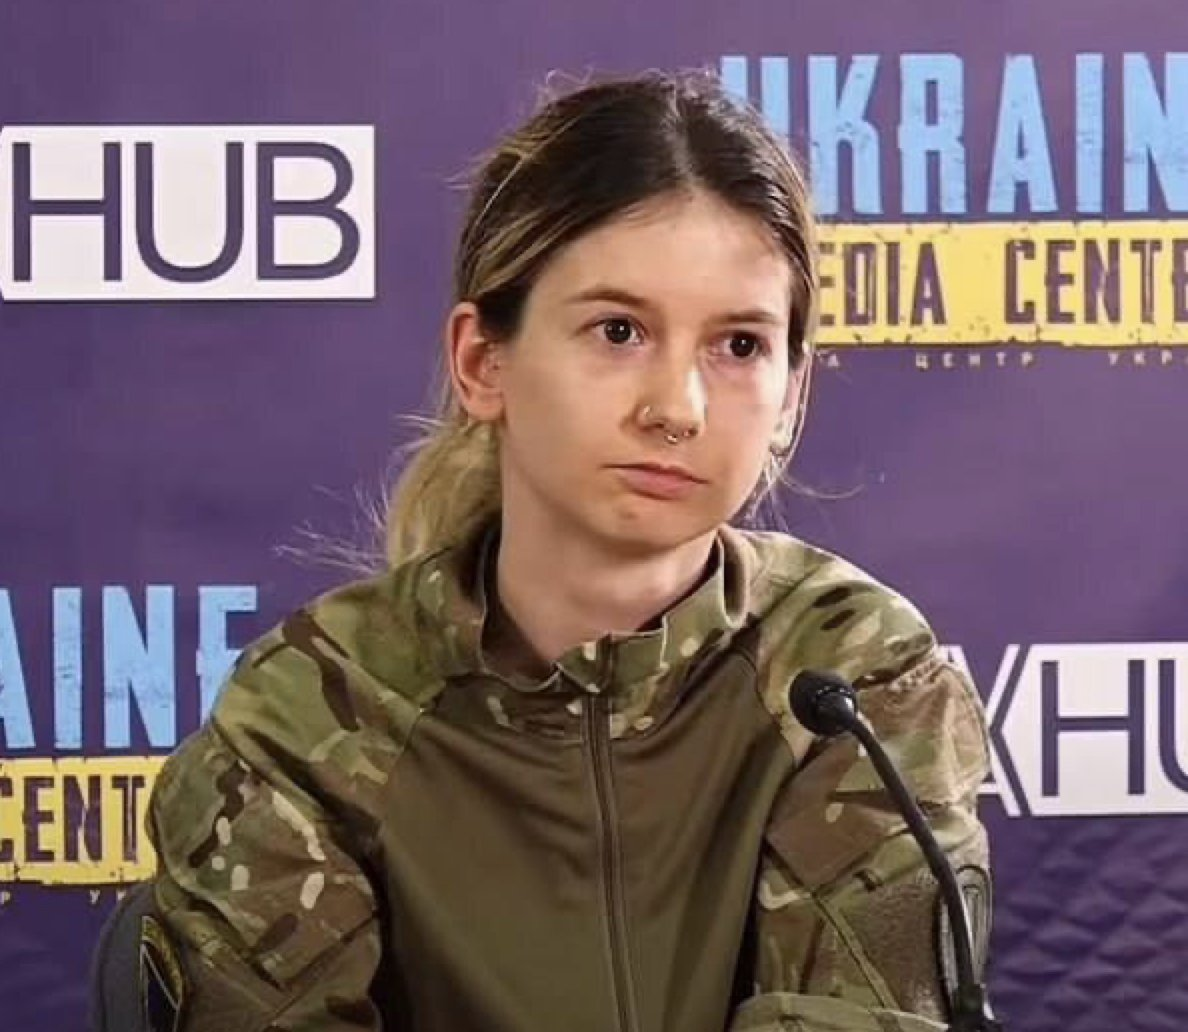 Emese Fajk المجرية المخادعة في الفيلق الأوكراني متهمة بالسرقة